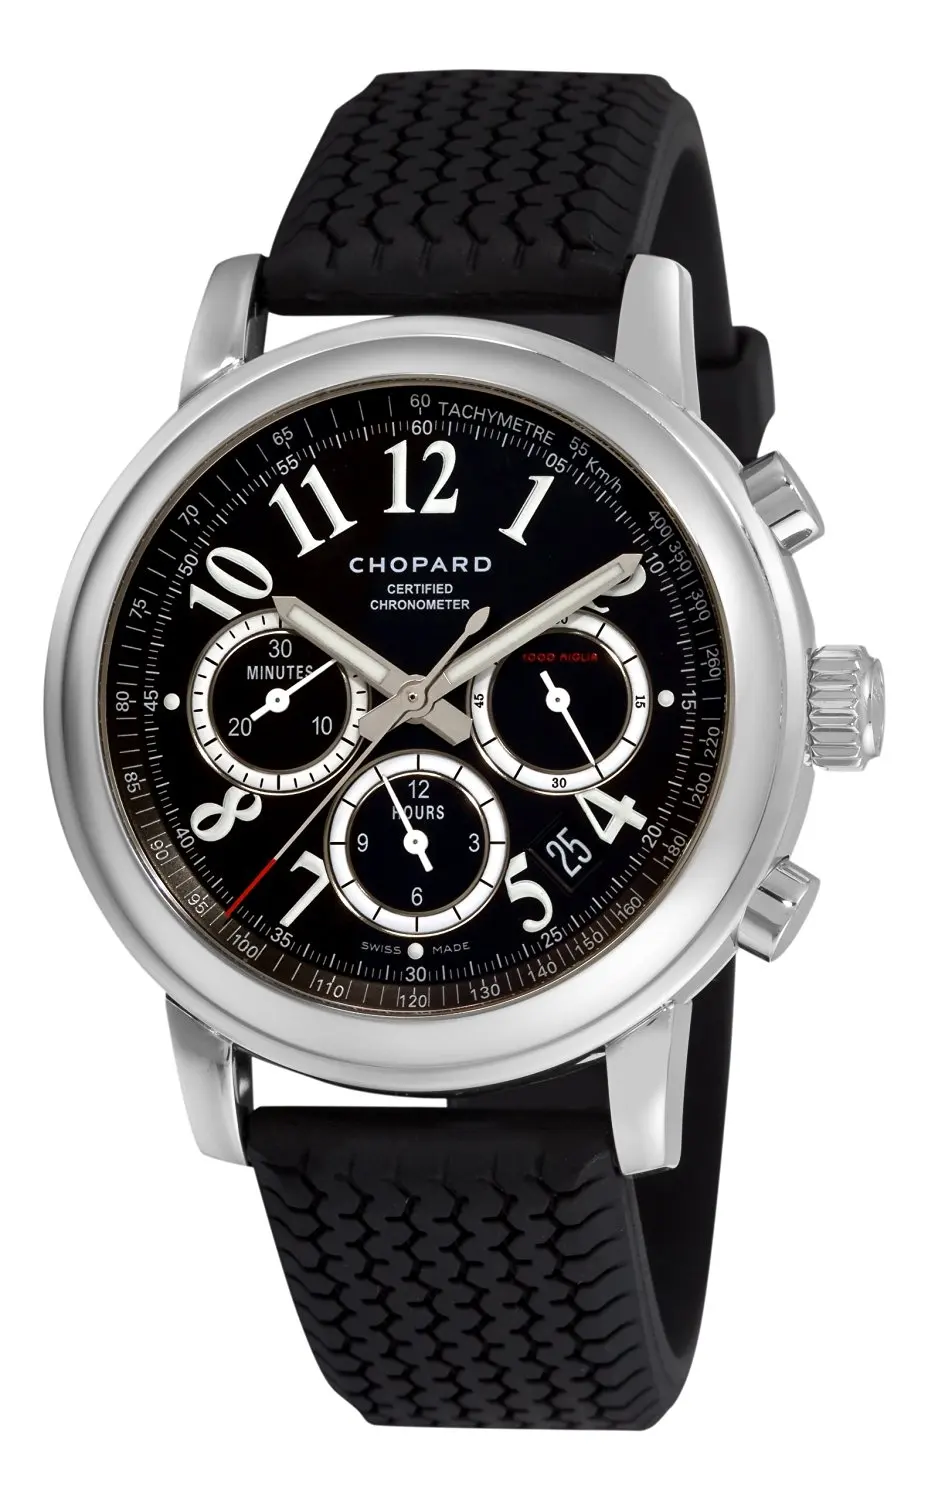 Cheap Watch Chopard, find Watch Chopard deals on line at Alibaba.com